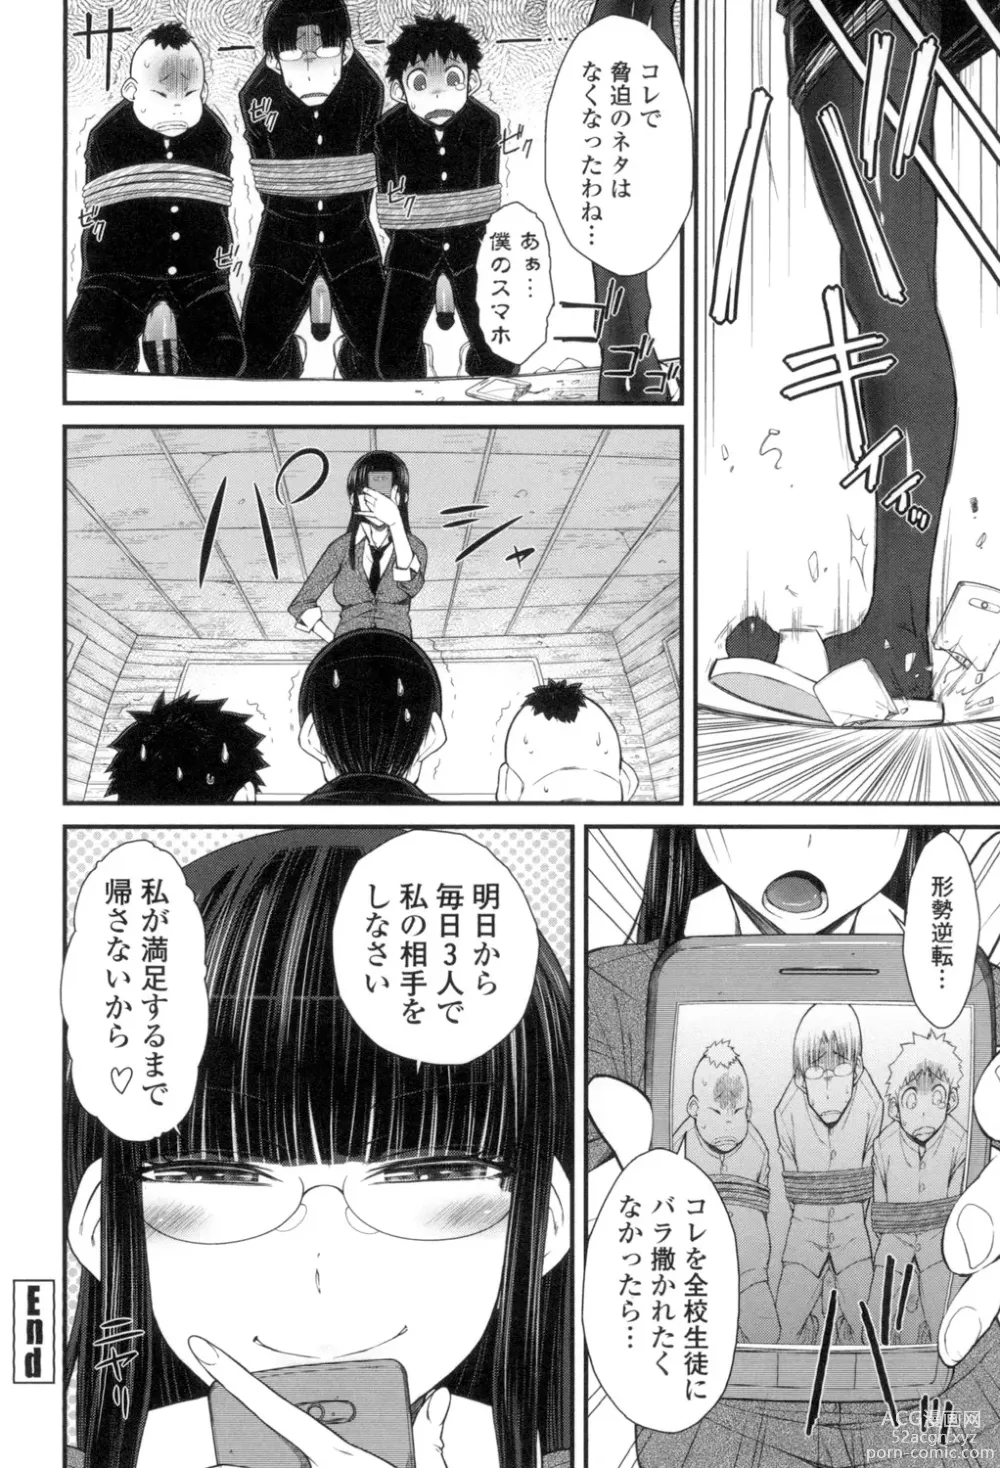 Page 213 of manga Kochira Joshi Shain Senyou Seishorika - Sex Industry Division for Womens Employees Dedicated